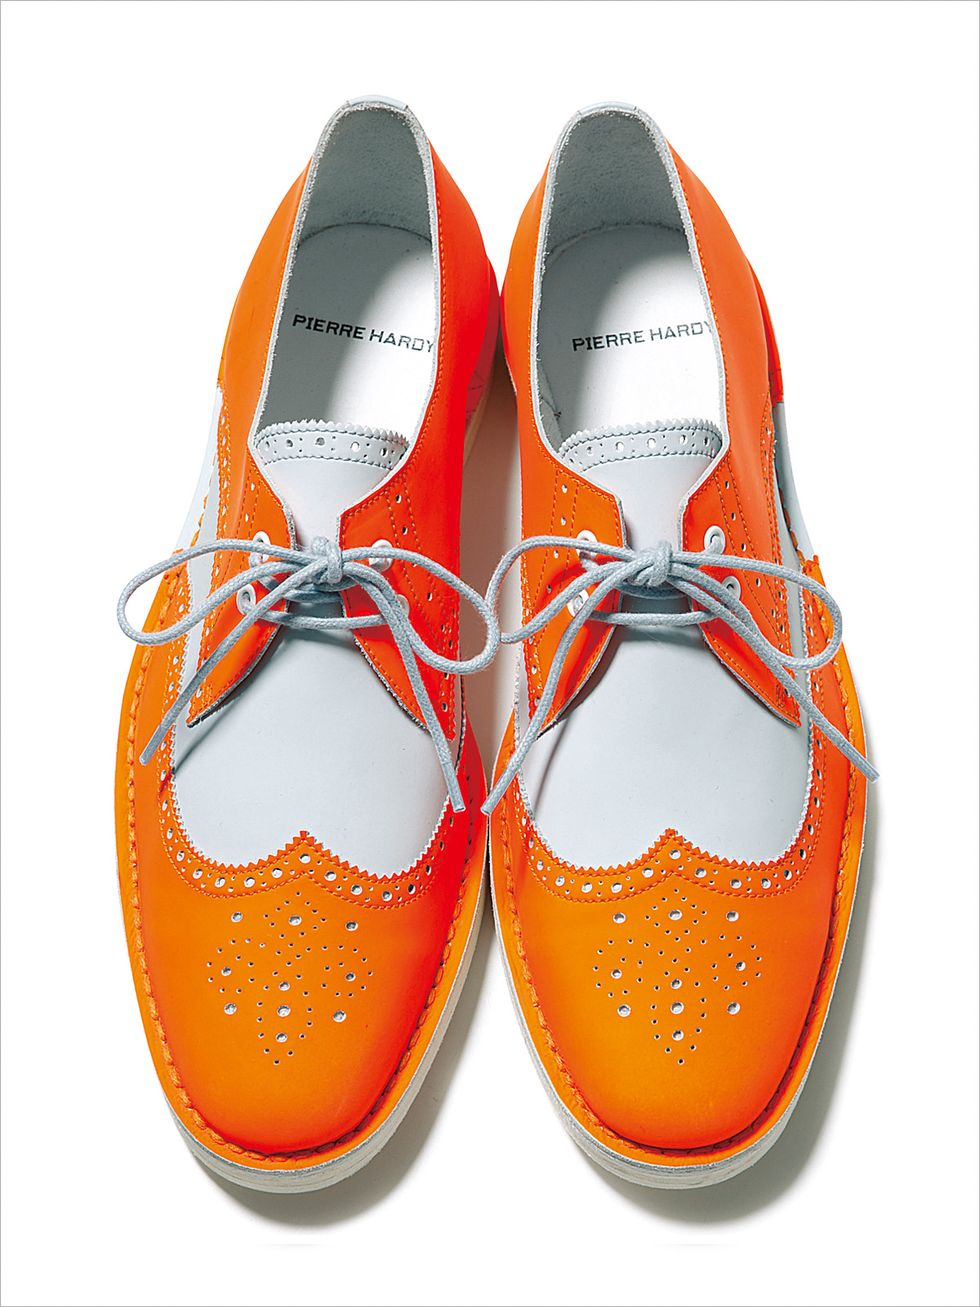 Footwear, Product, Orange, Yellow, Shoe, White, Red, Amber, Tan, Font, 